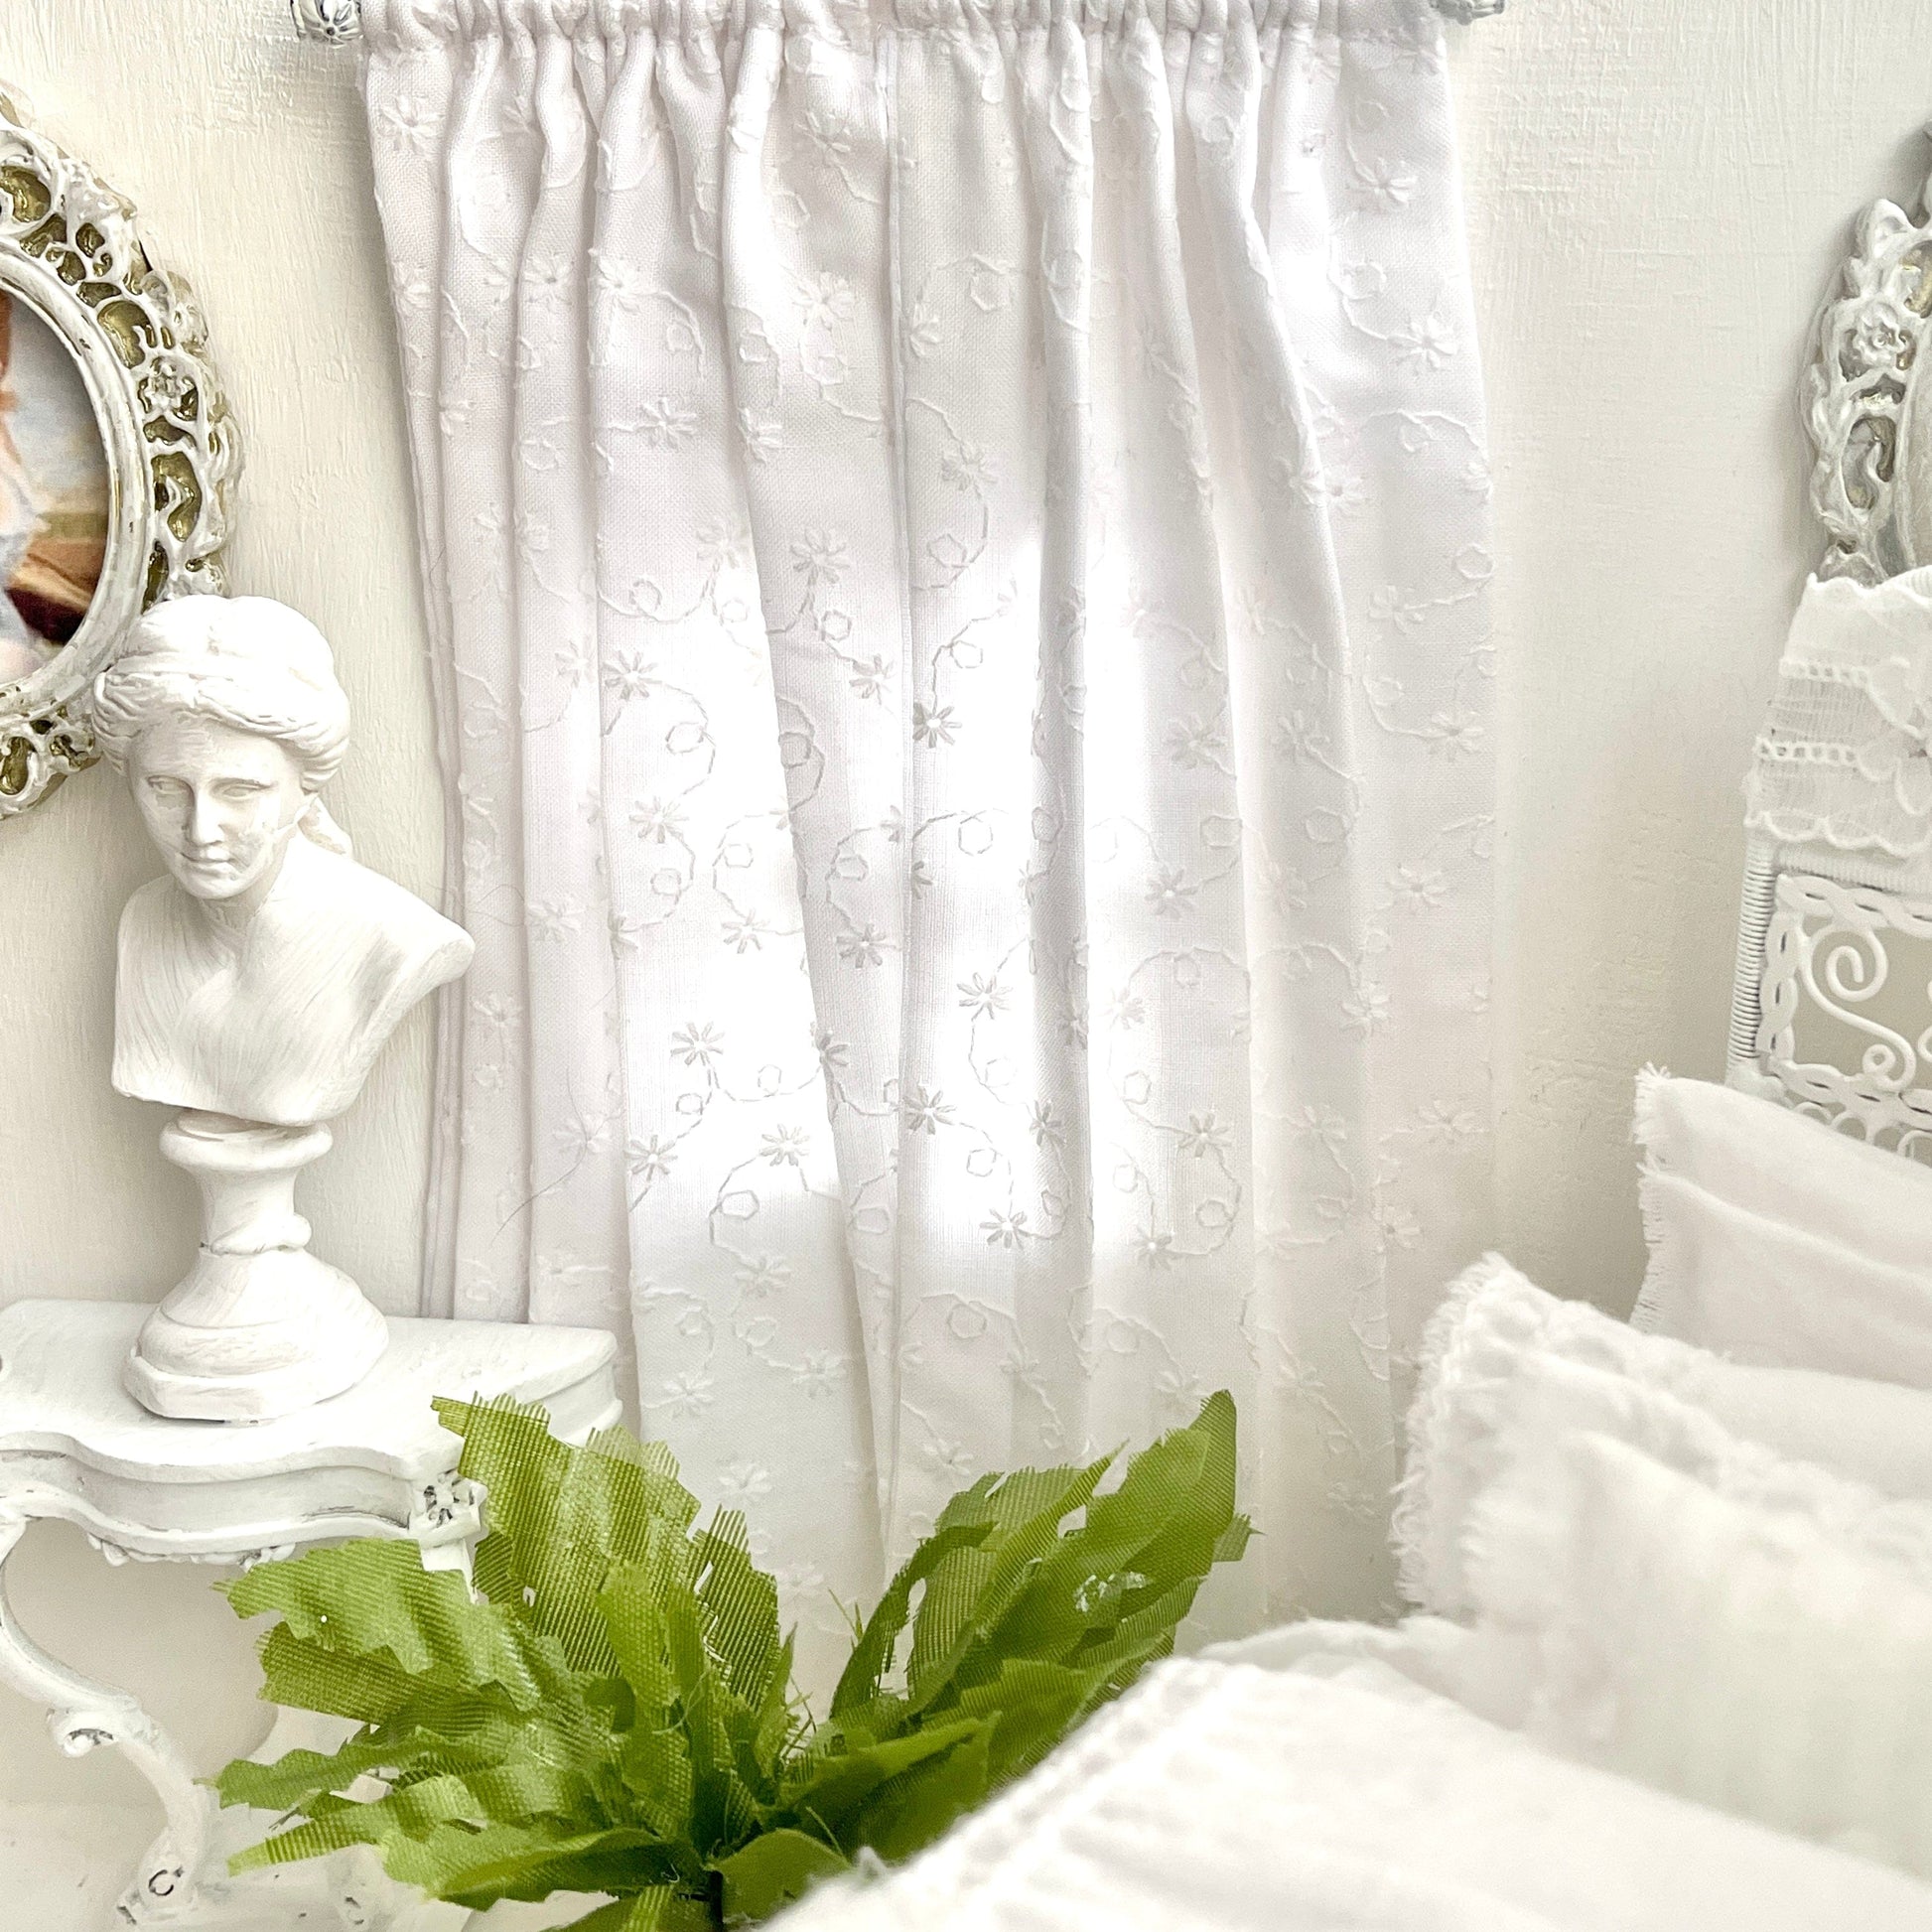 Chantallena Doll House Dollhouse Accessories Curtains | White Petite Eyelet 2 Panel Cotton Curtains | White Petite Eyelet